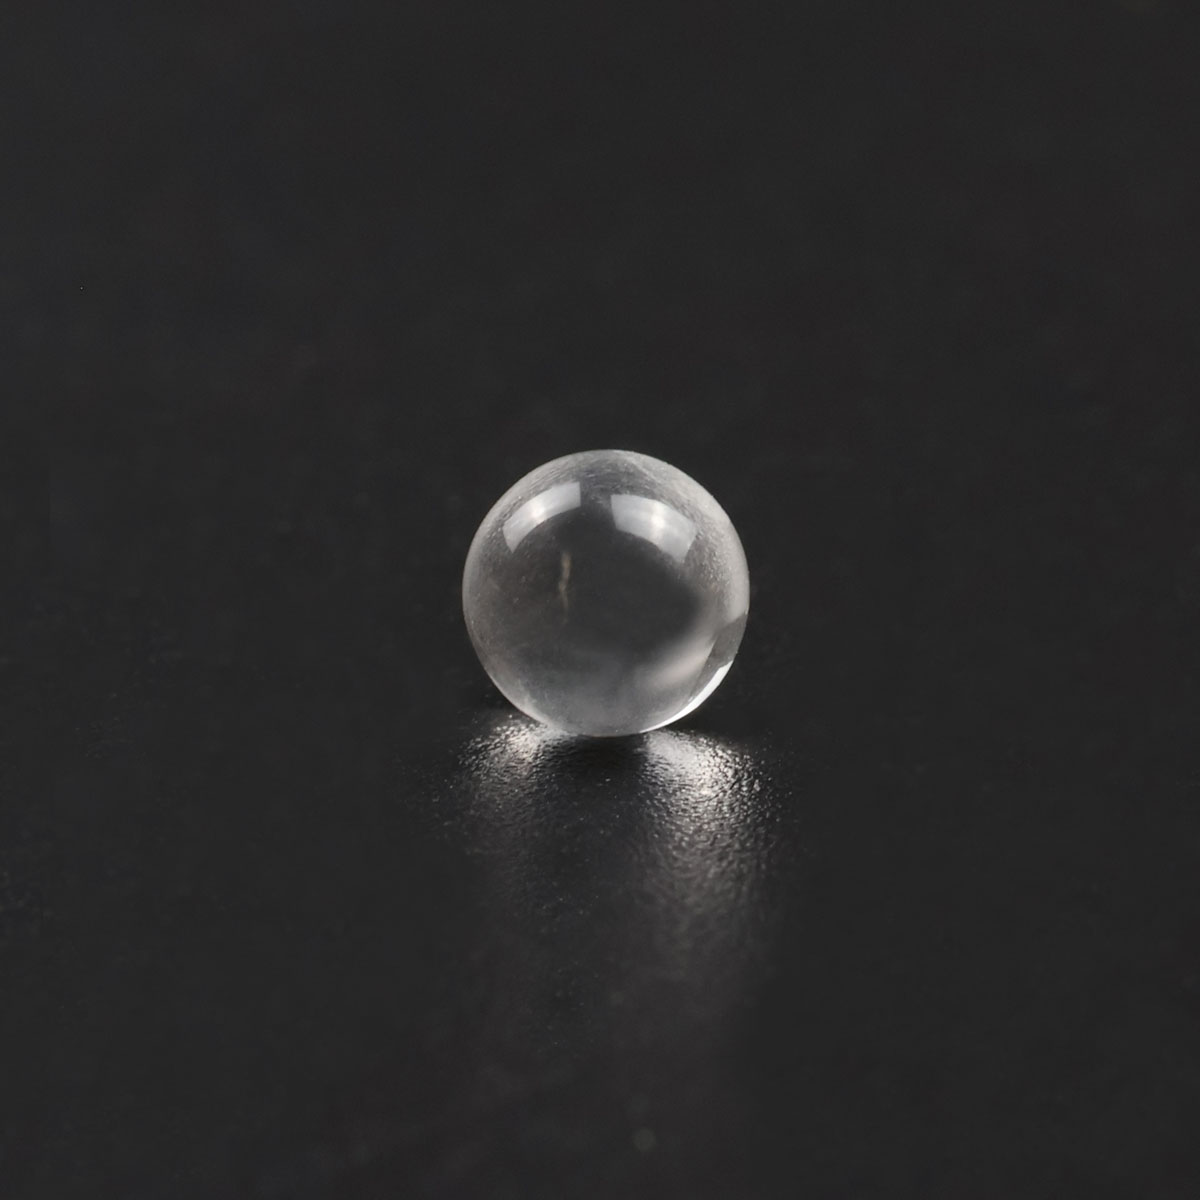 6mm quartz terp pearls